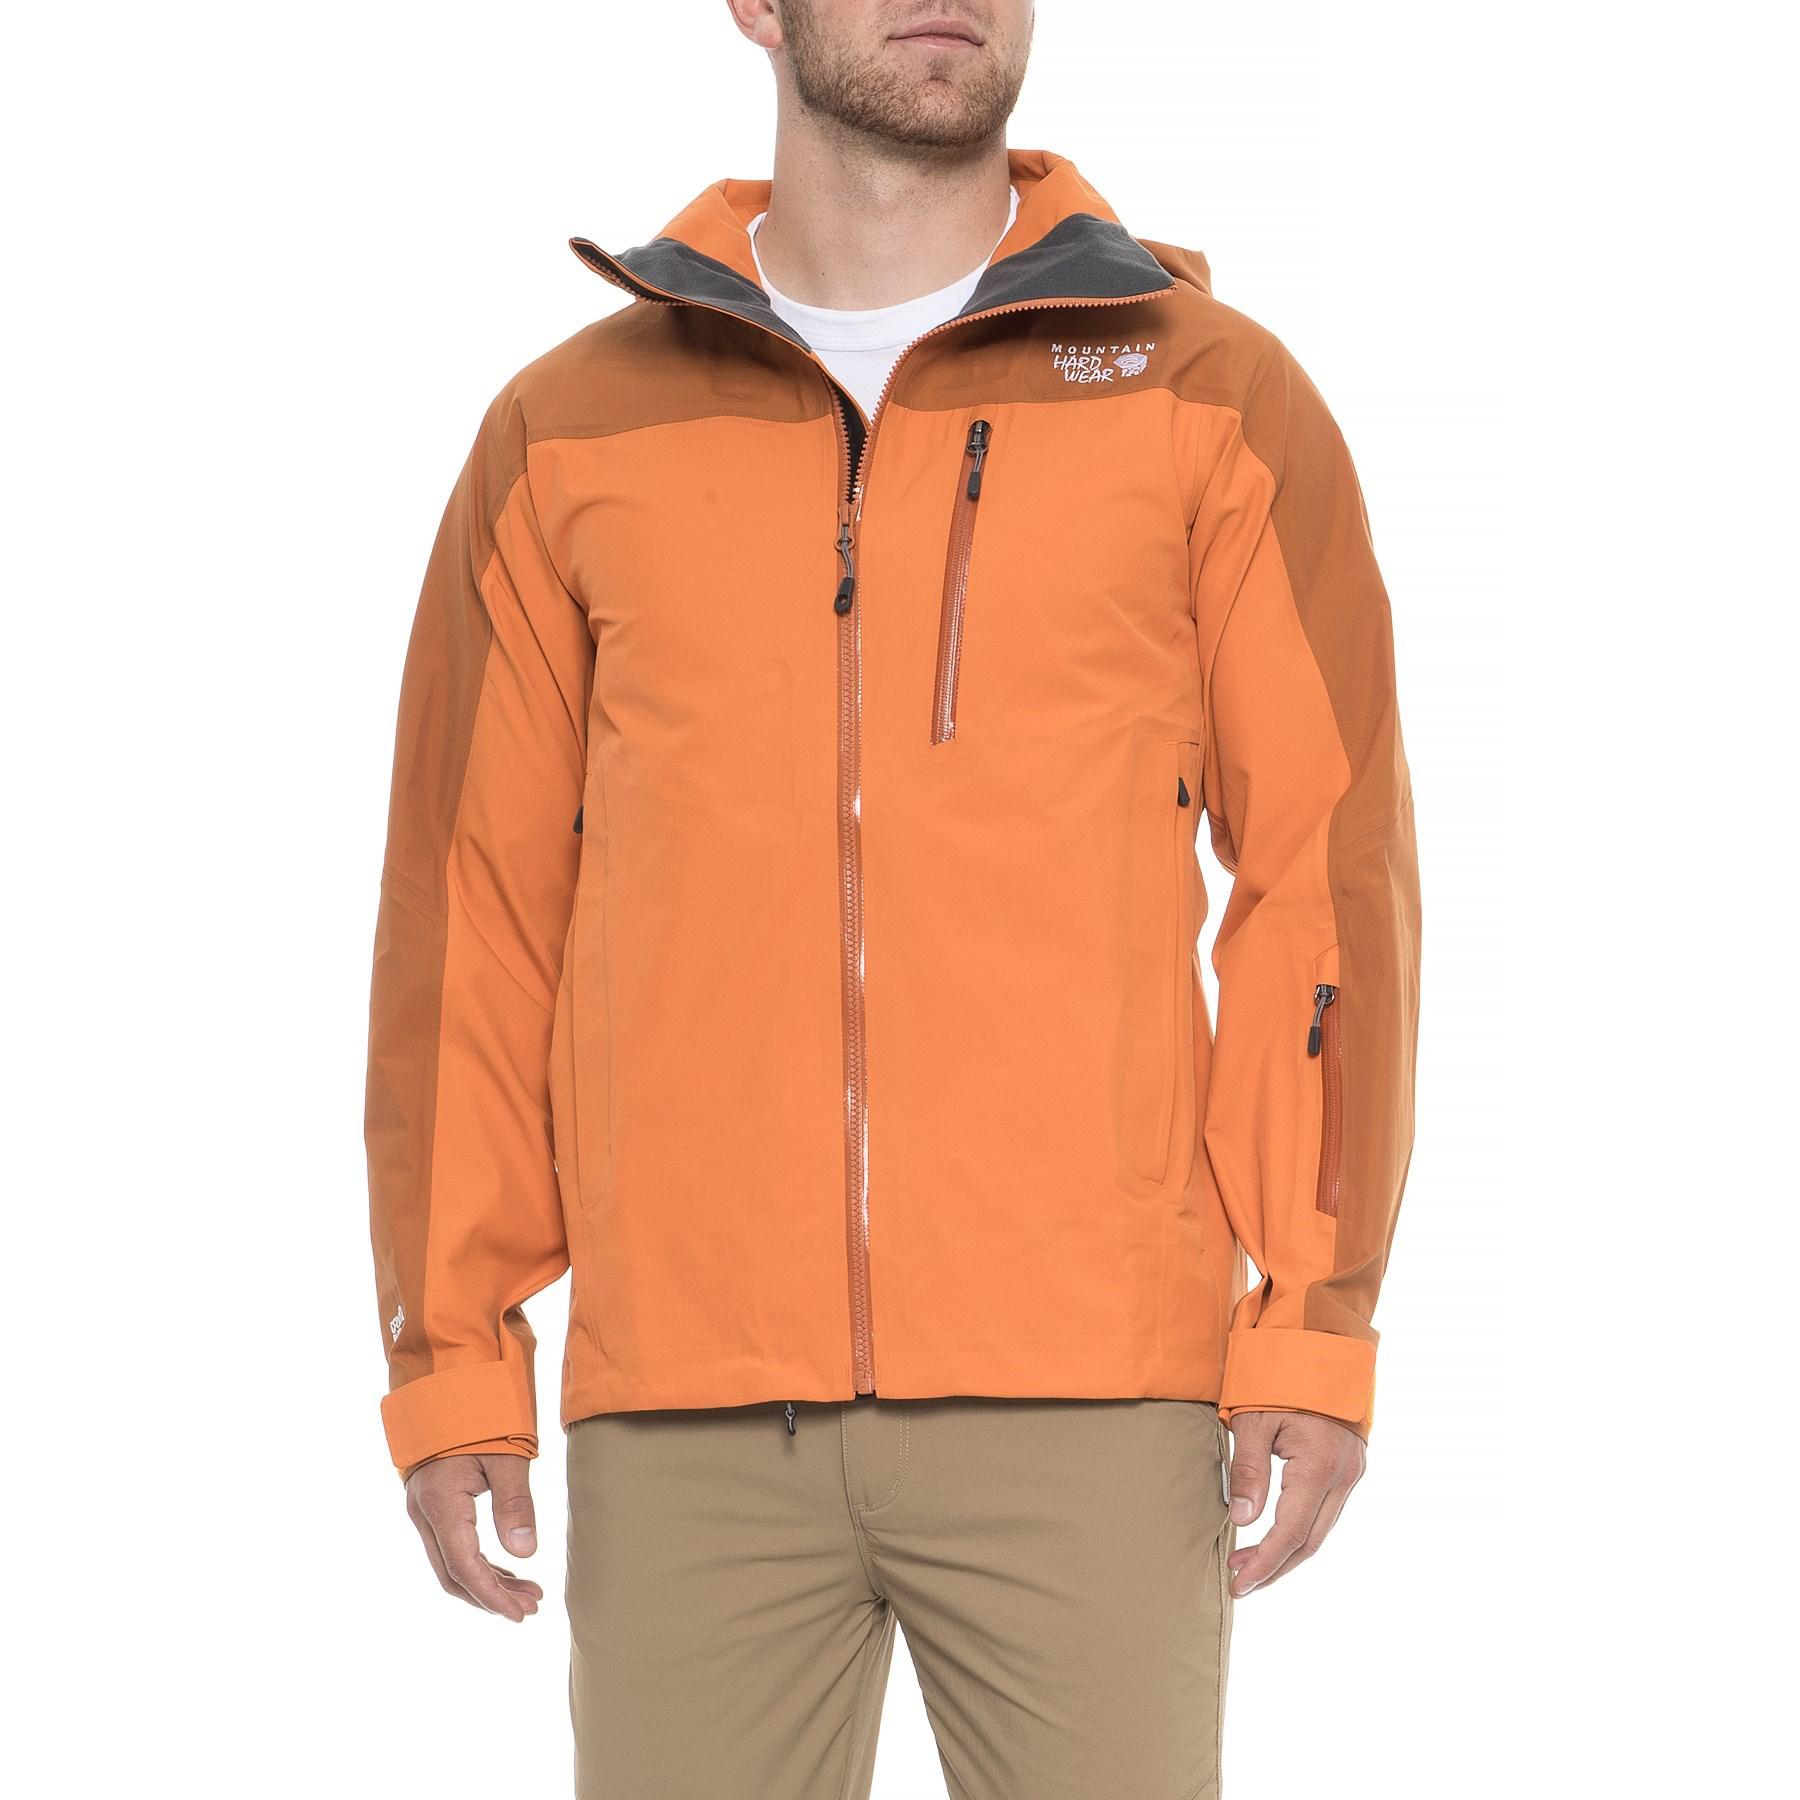 Mountain Hardwear Synthetic Tenacity Pro Ii Ski Jacket in Light Orange/  Dark Orange (Orange) for Men - Lyst